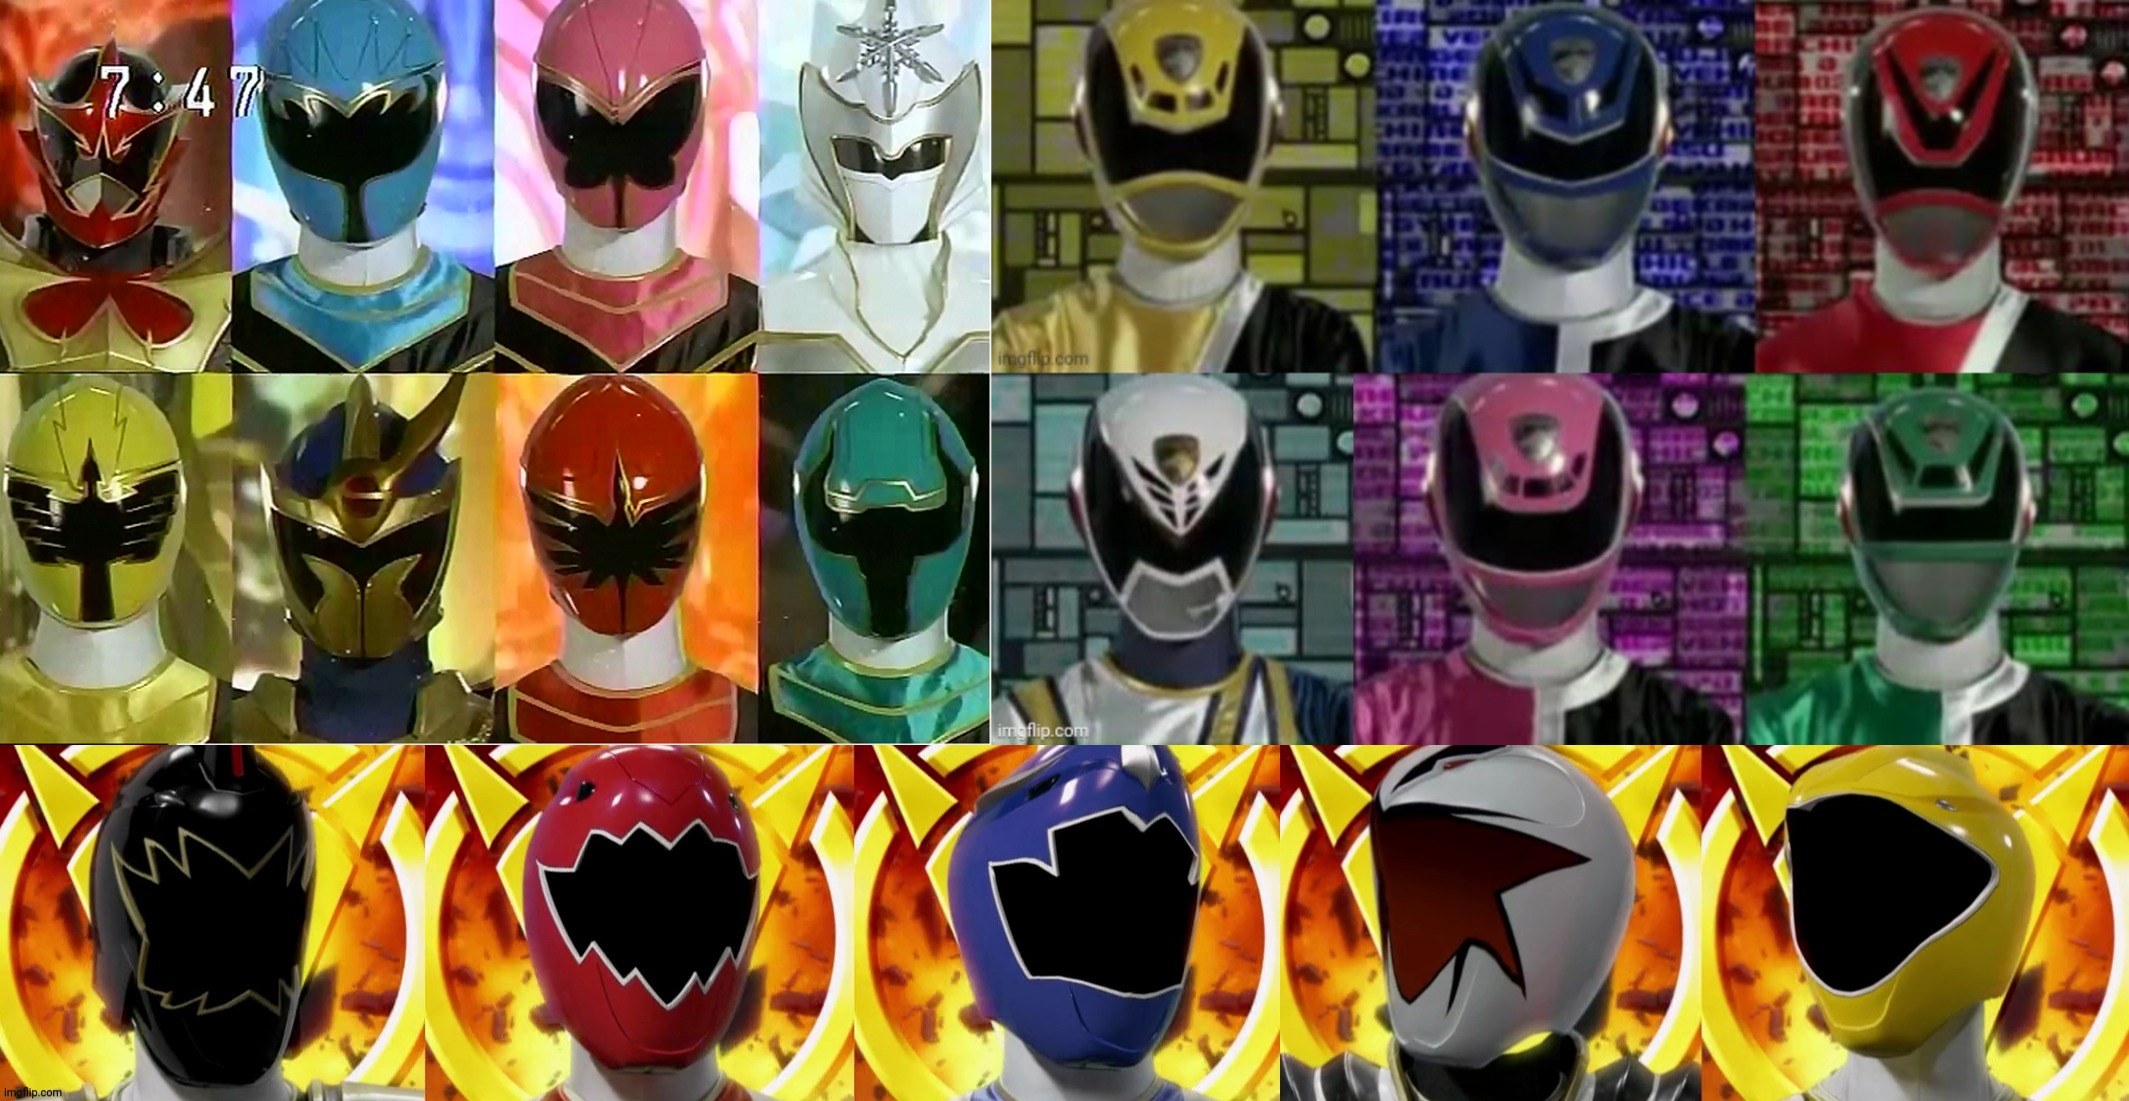 3 of my favorite Super Sentai/Power Rangers series (2003-2006/2004-2007) | image tagged in memes,power rangers,super sentai | made w/ Imgflip meme maker